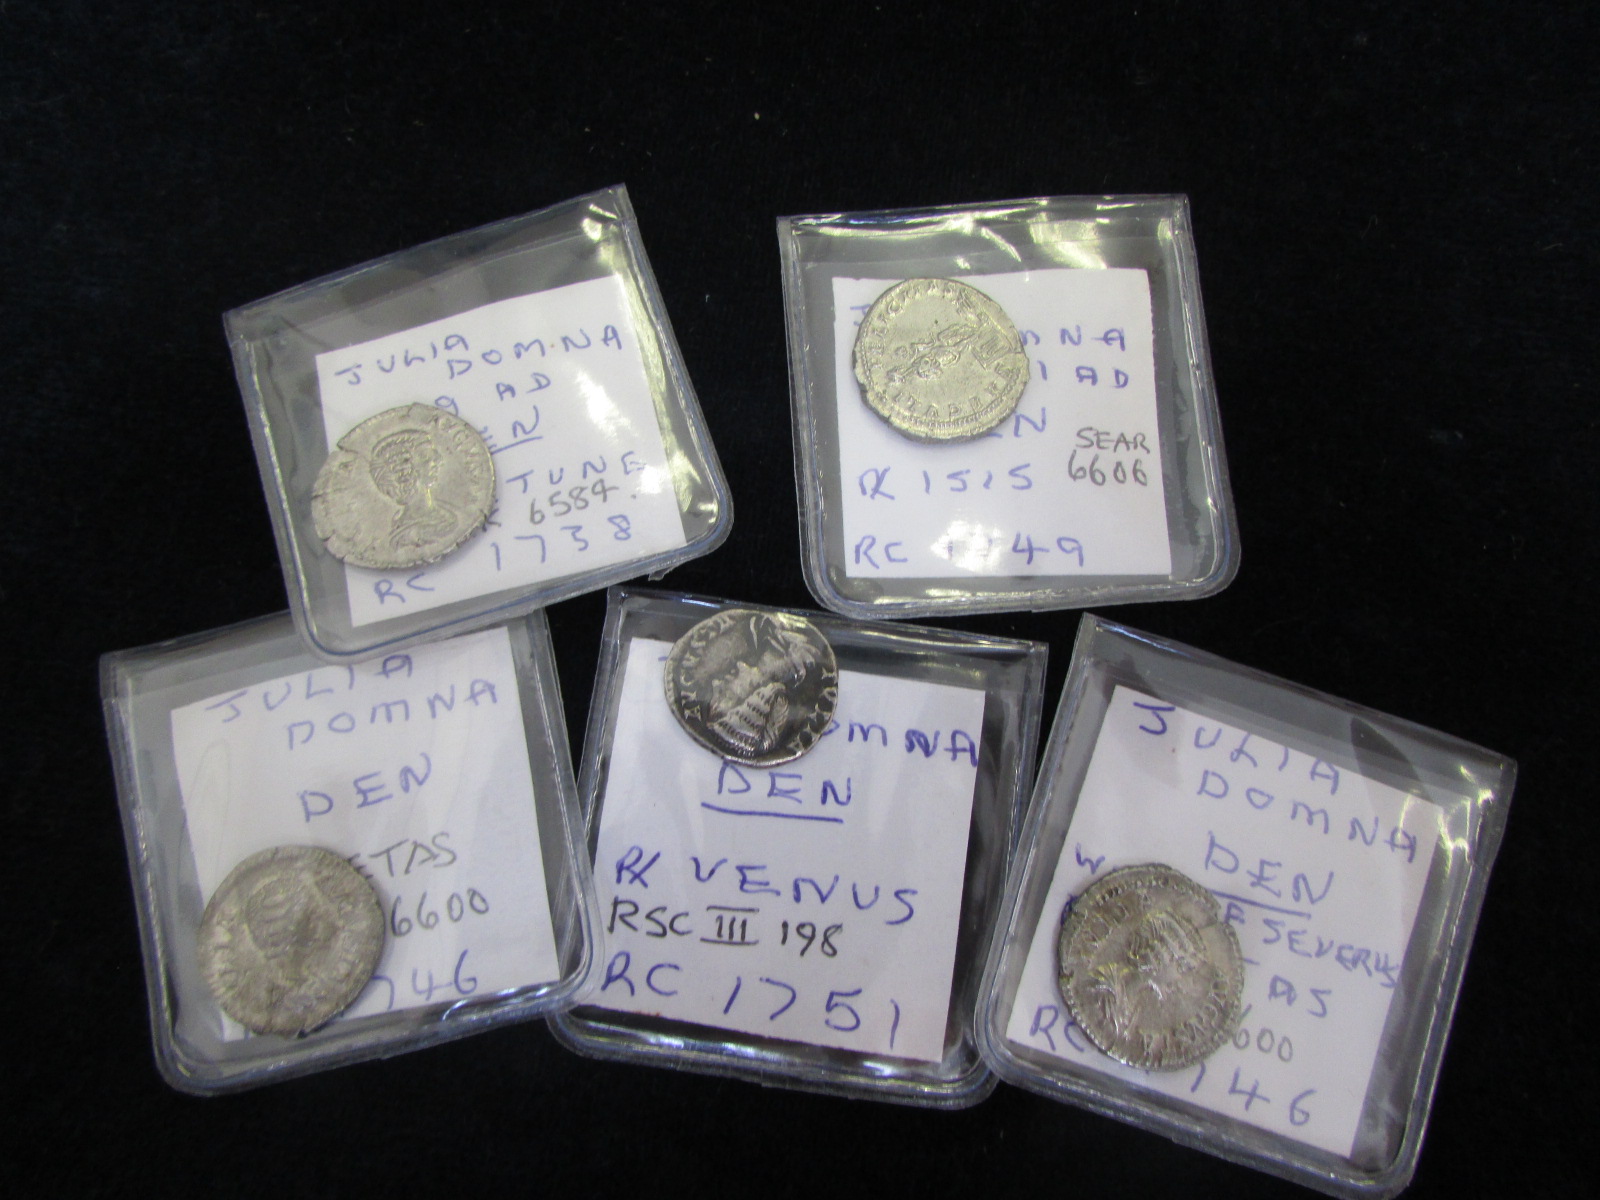 Julia Domna silver denarii, reverses:- Venus RSC Vol. III, 198, VF/GF, Pietas Sear 6600 x 2 VF and